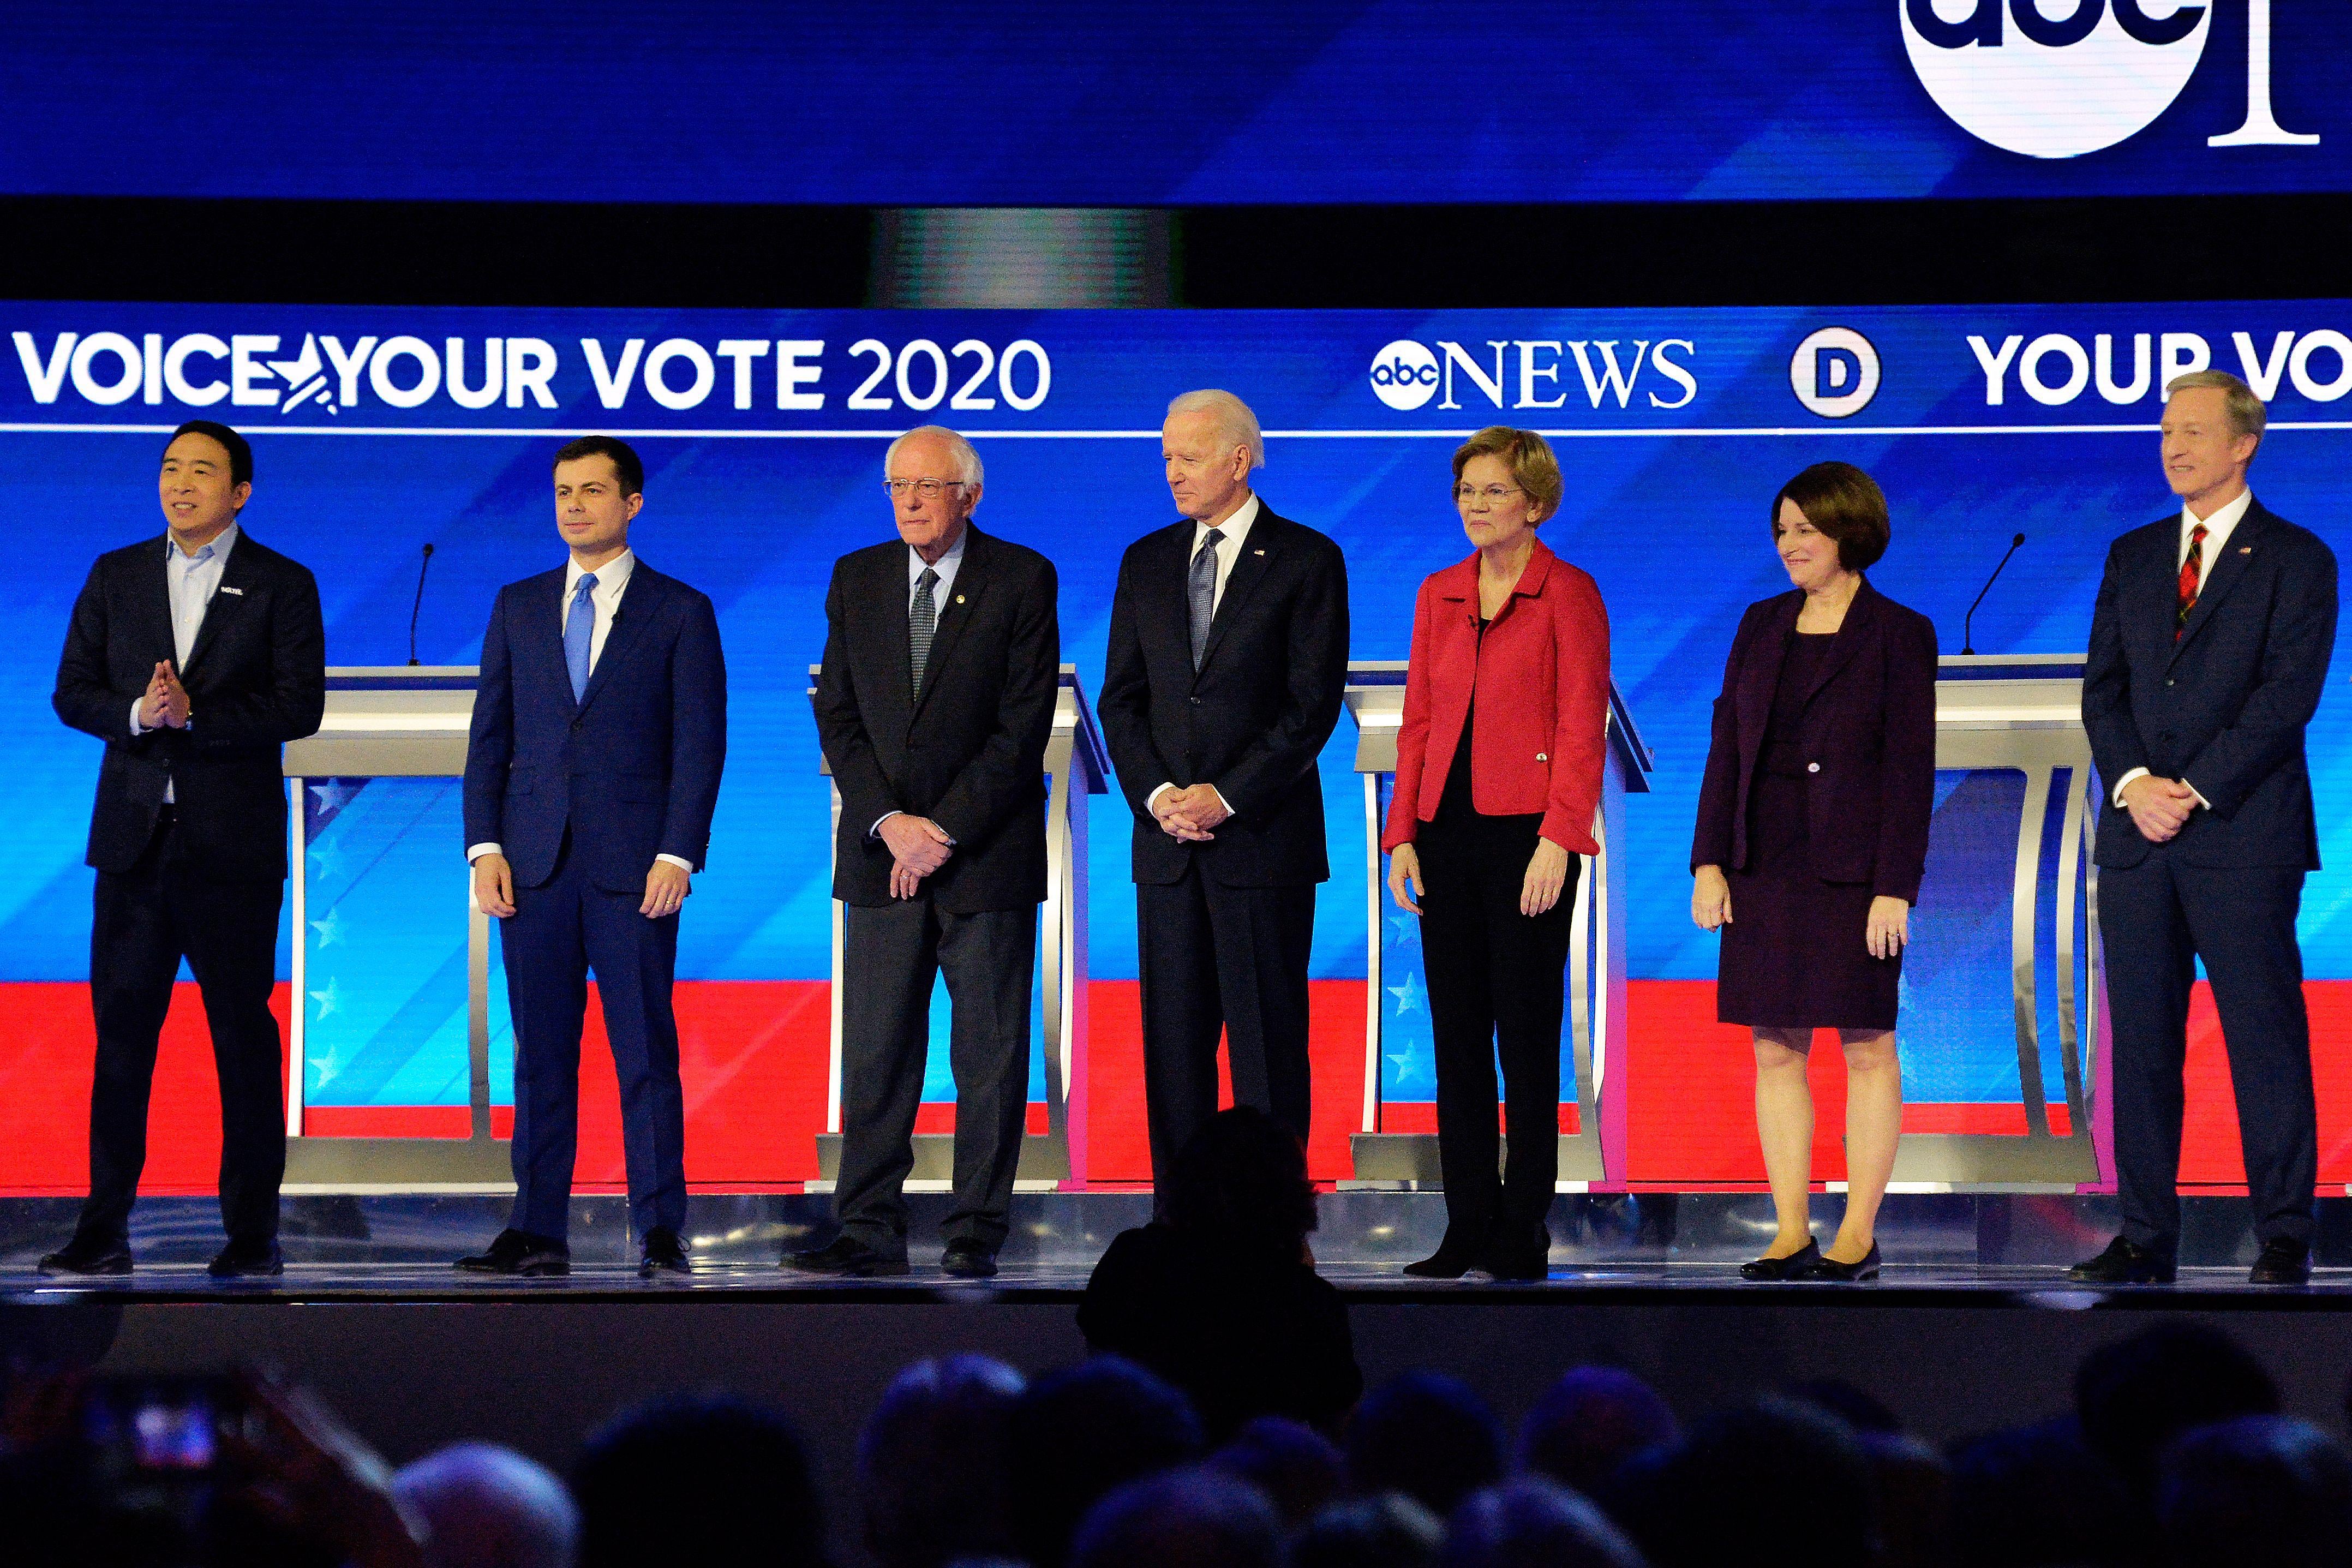 Andrew Yang, Pete Buttigieg, Bernie Sanders, Joe Biden, Elizabeth Warren, Amy Klobuchar, and Tom Steyer all stand on a stage.